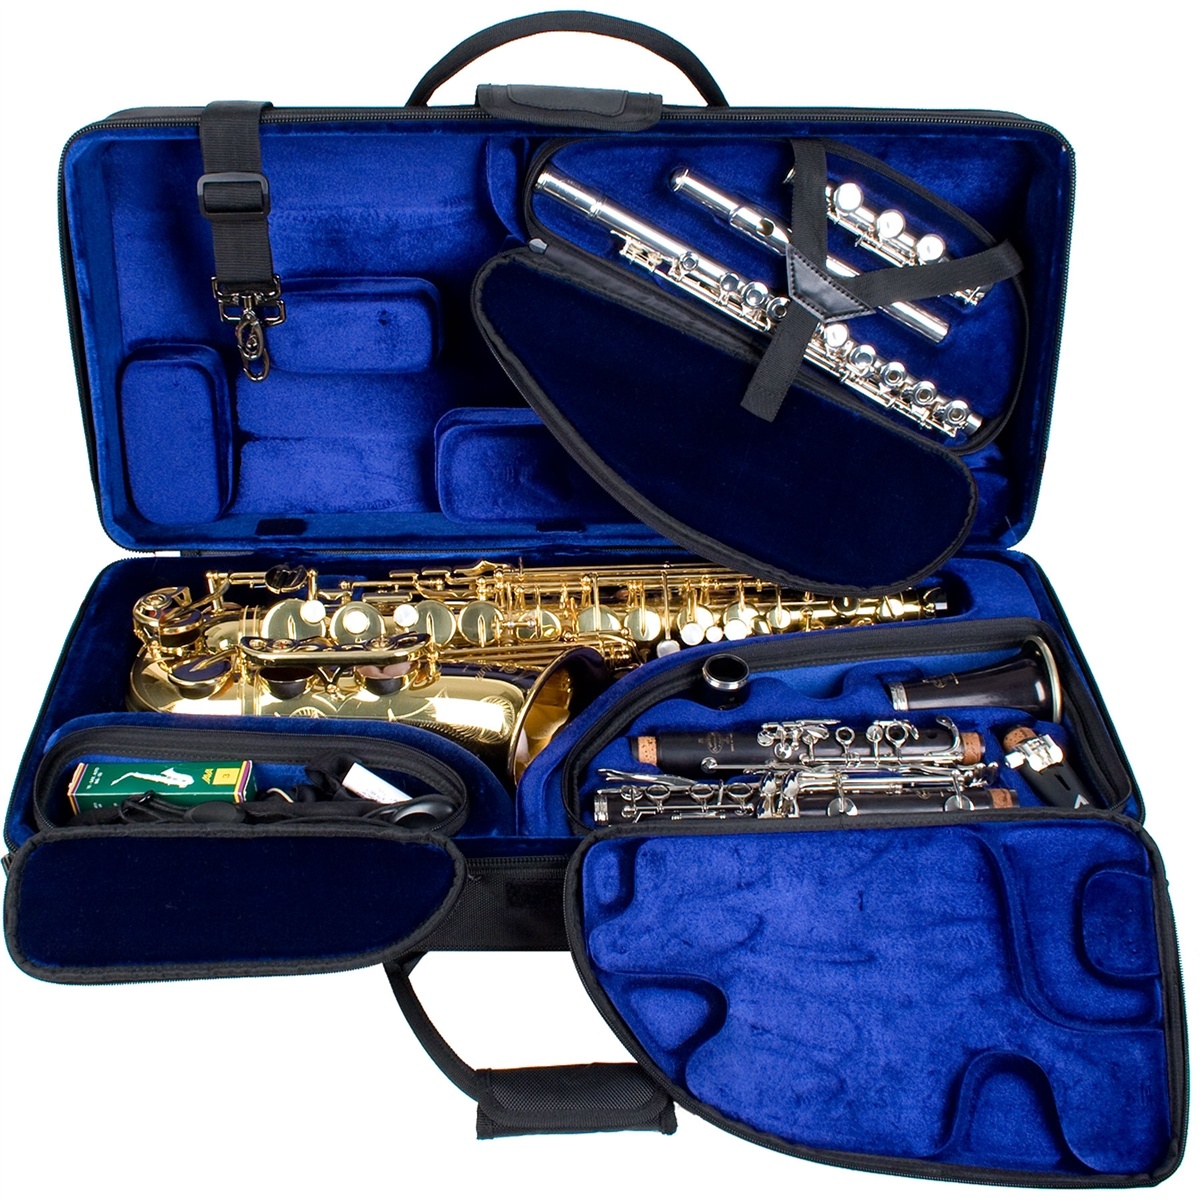 Protec Protec Pro Pac Alto Sax/Clarinet/Flute Case